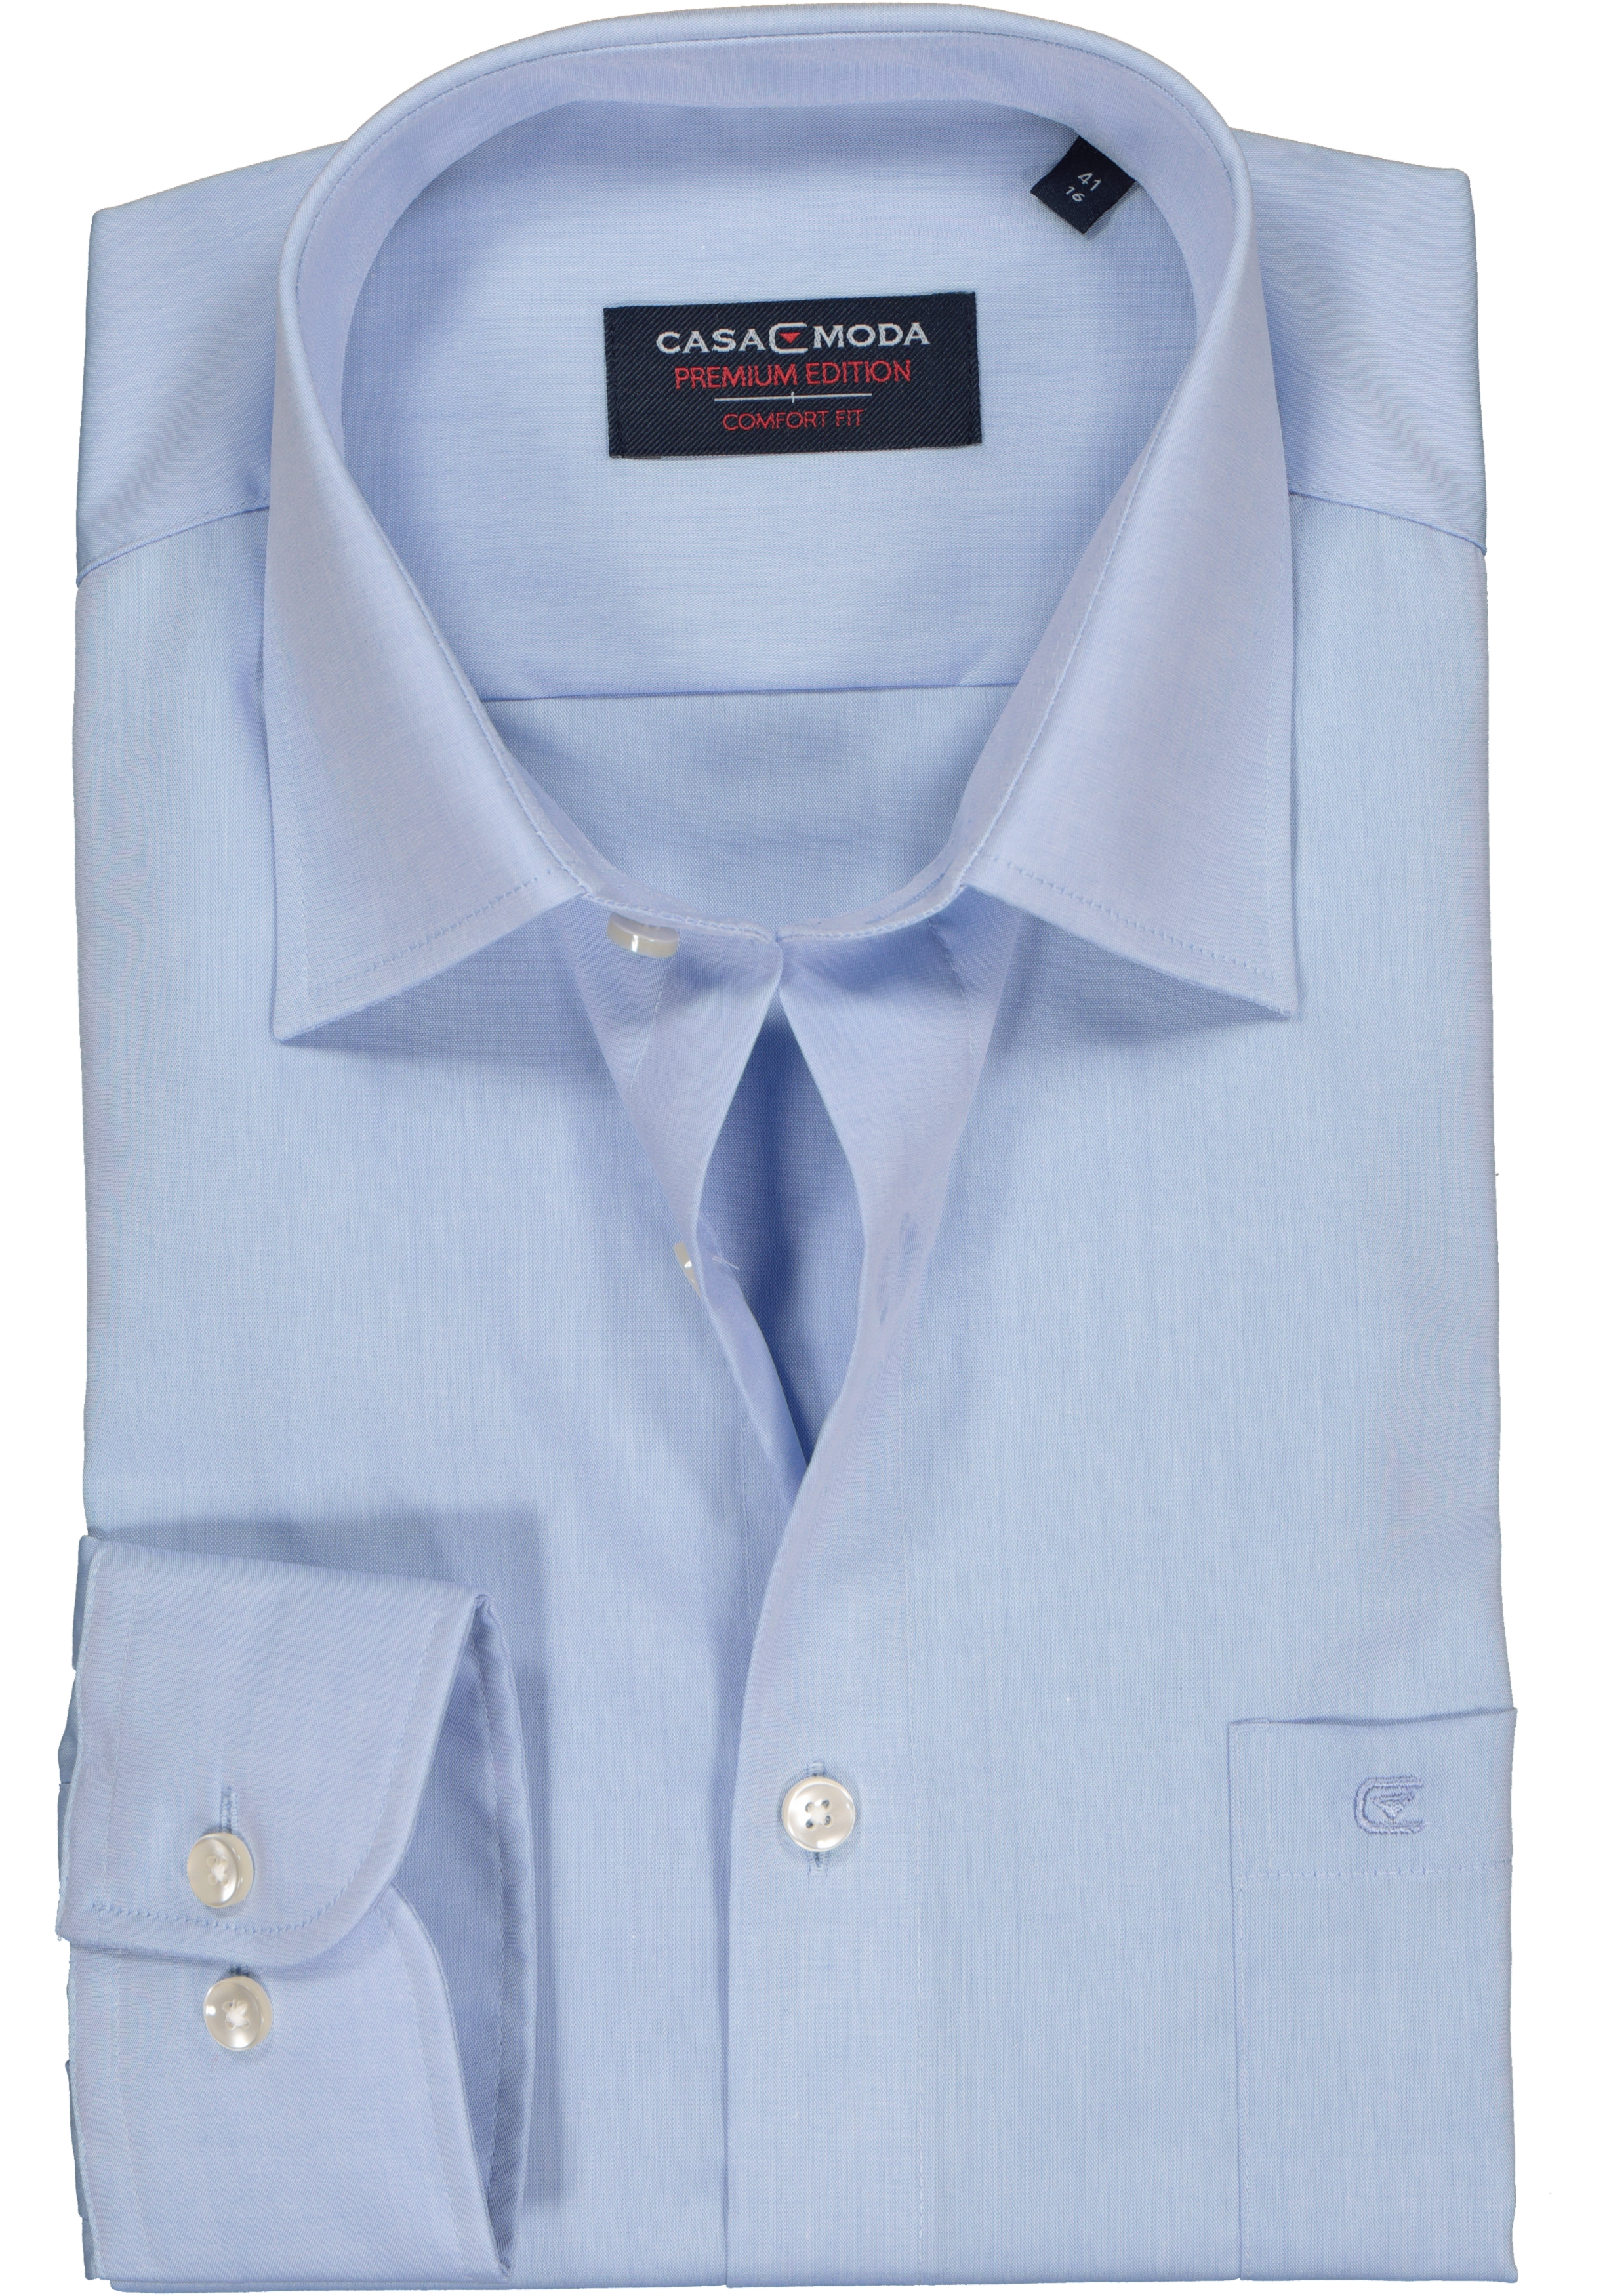 CASA MODA comfort fit overhemd, mouwlengte 72 cm, lichtblauw  